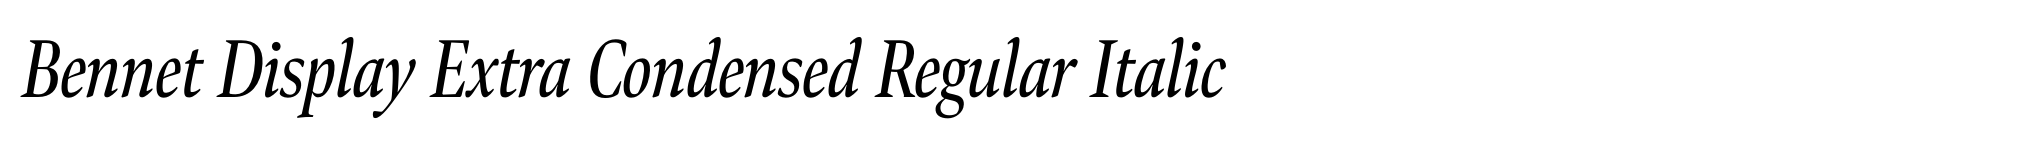 Bennet Display Extra Condensed Regular Italic image